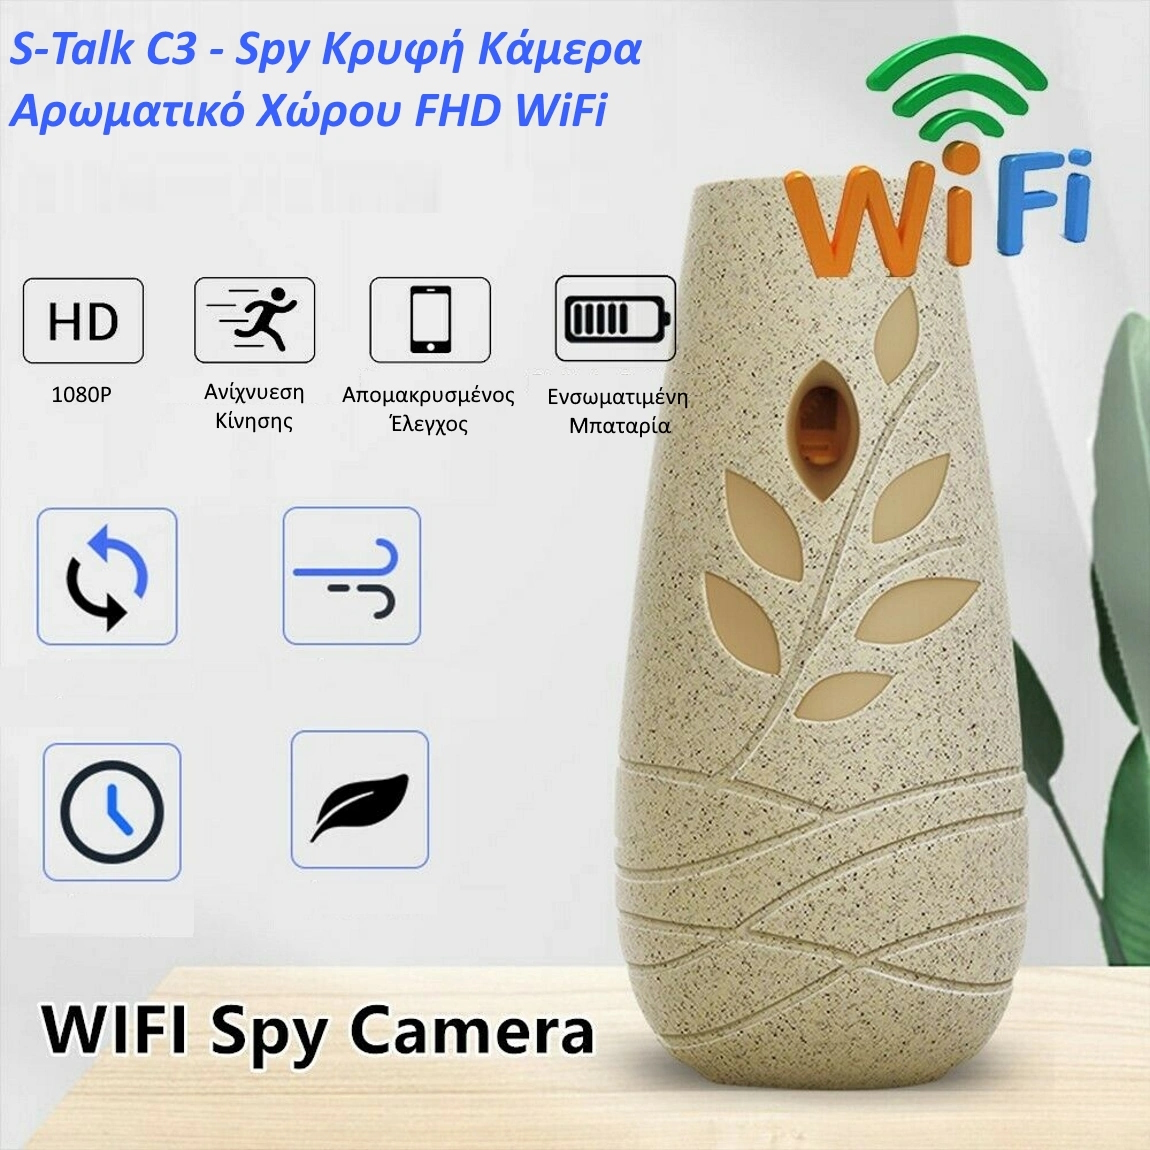 S-Talk C3 - Spy Κρυφή Κάμερα Αρωματικό Χώρου